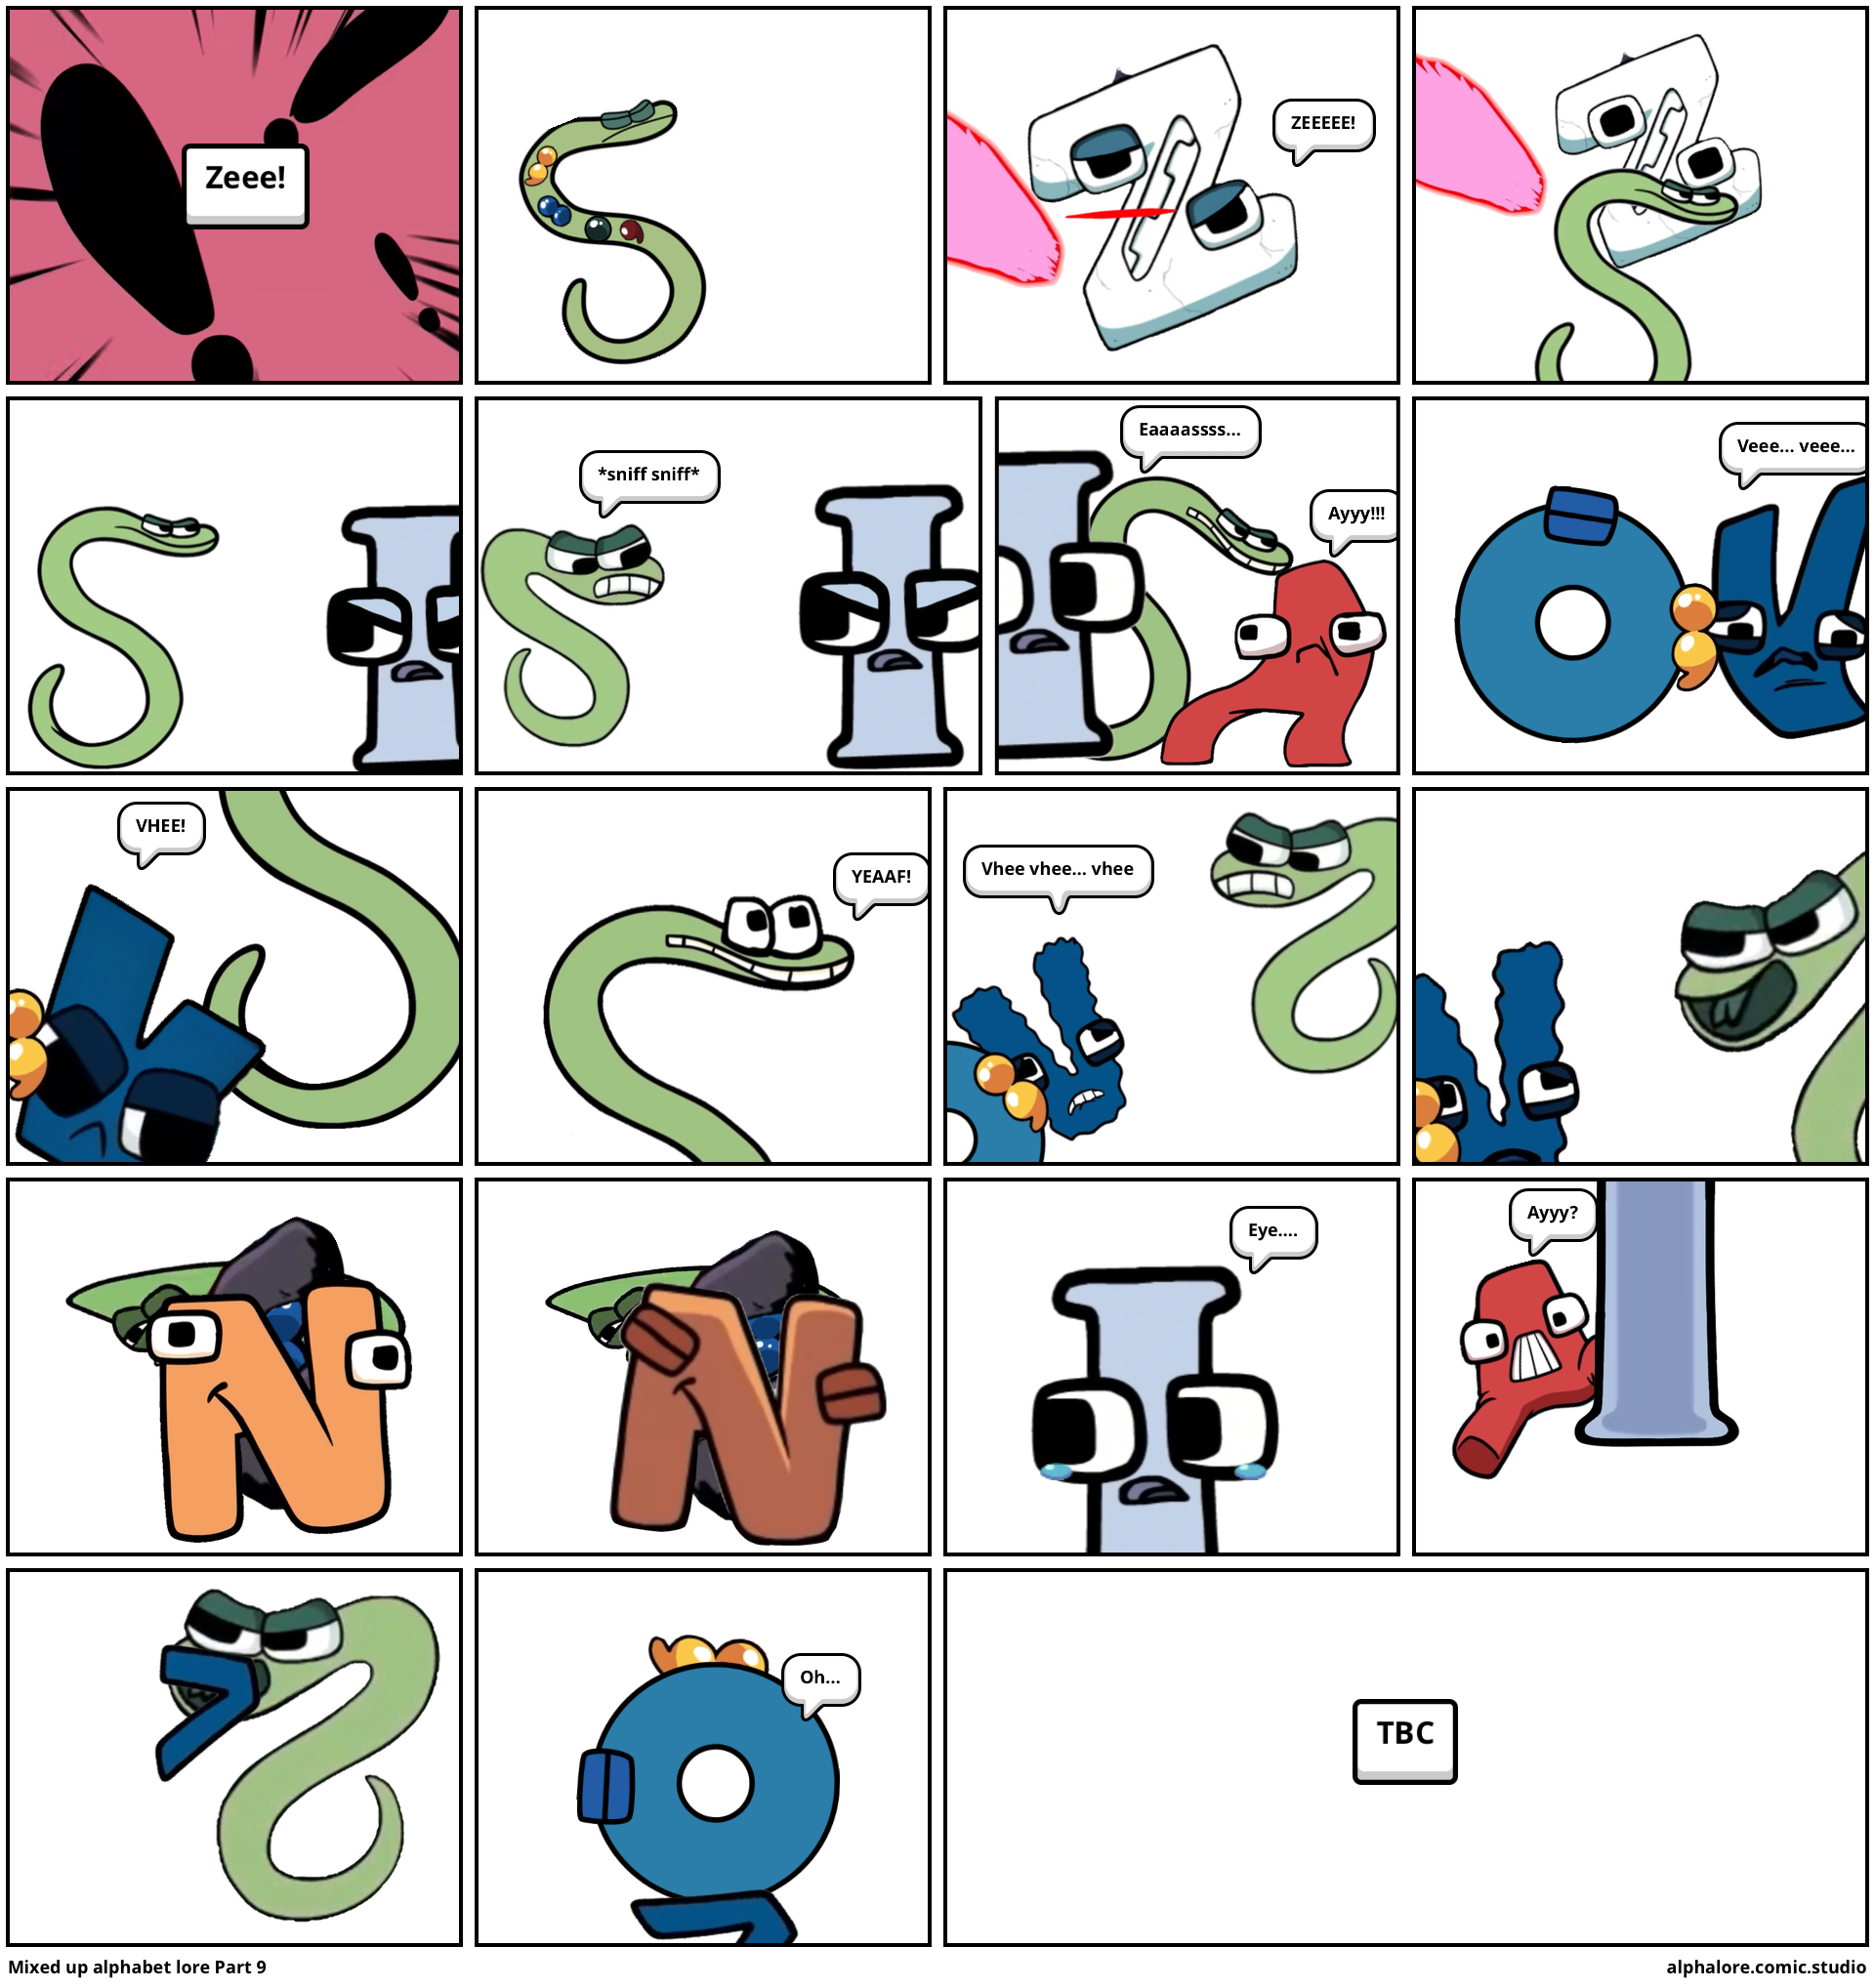 Mixed up alphabet lore Part 9